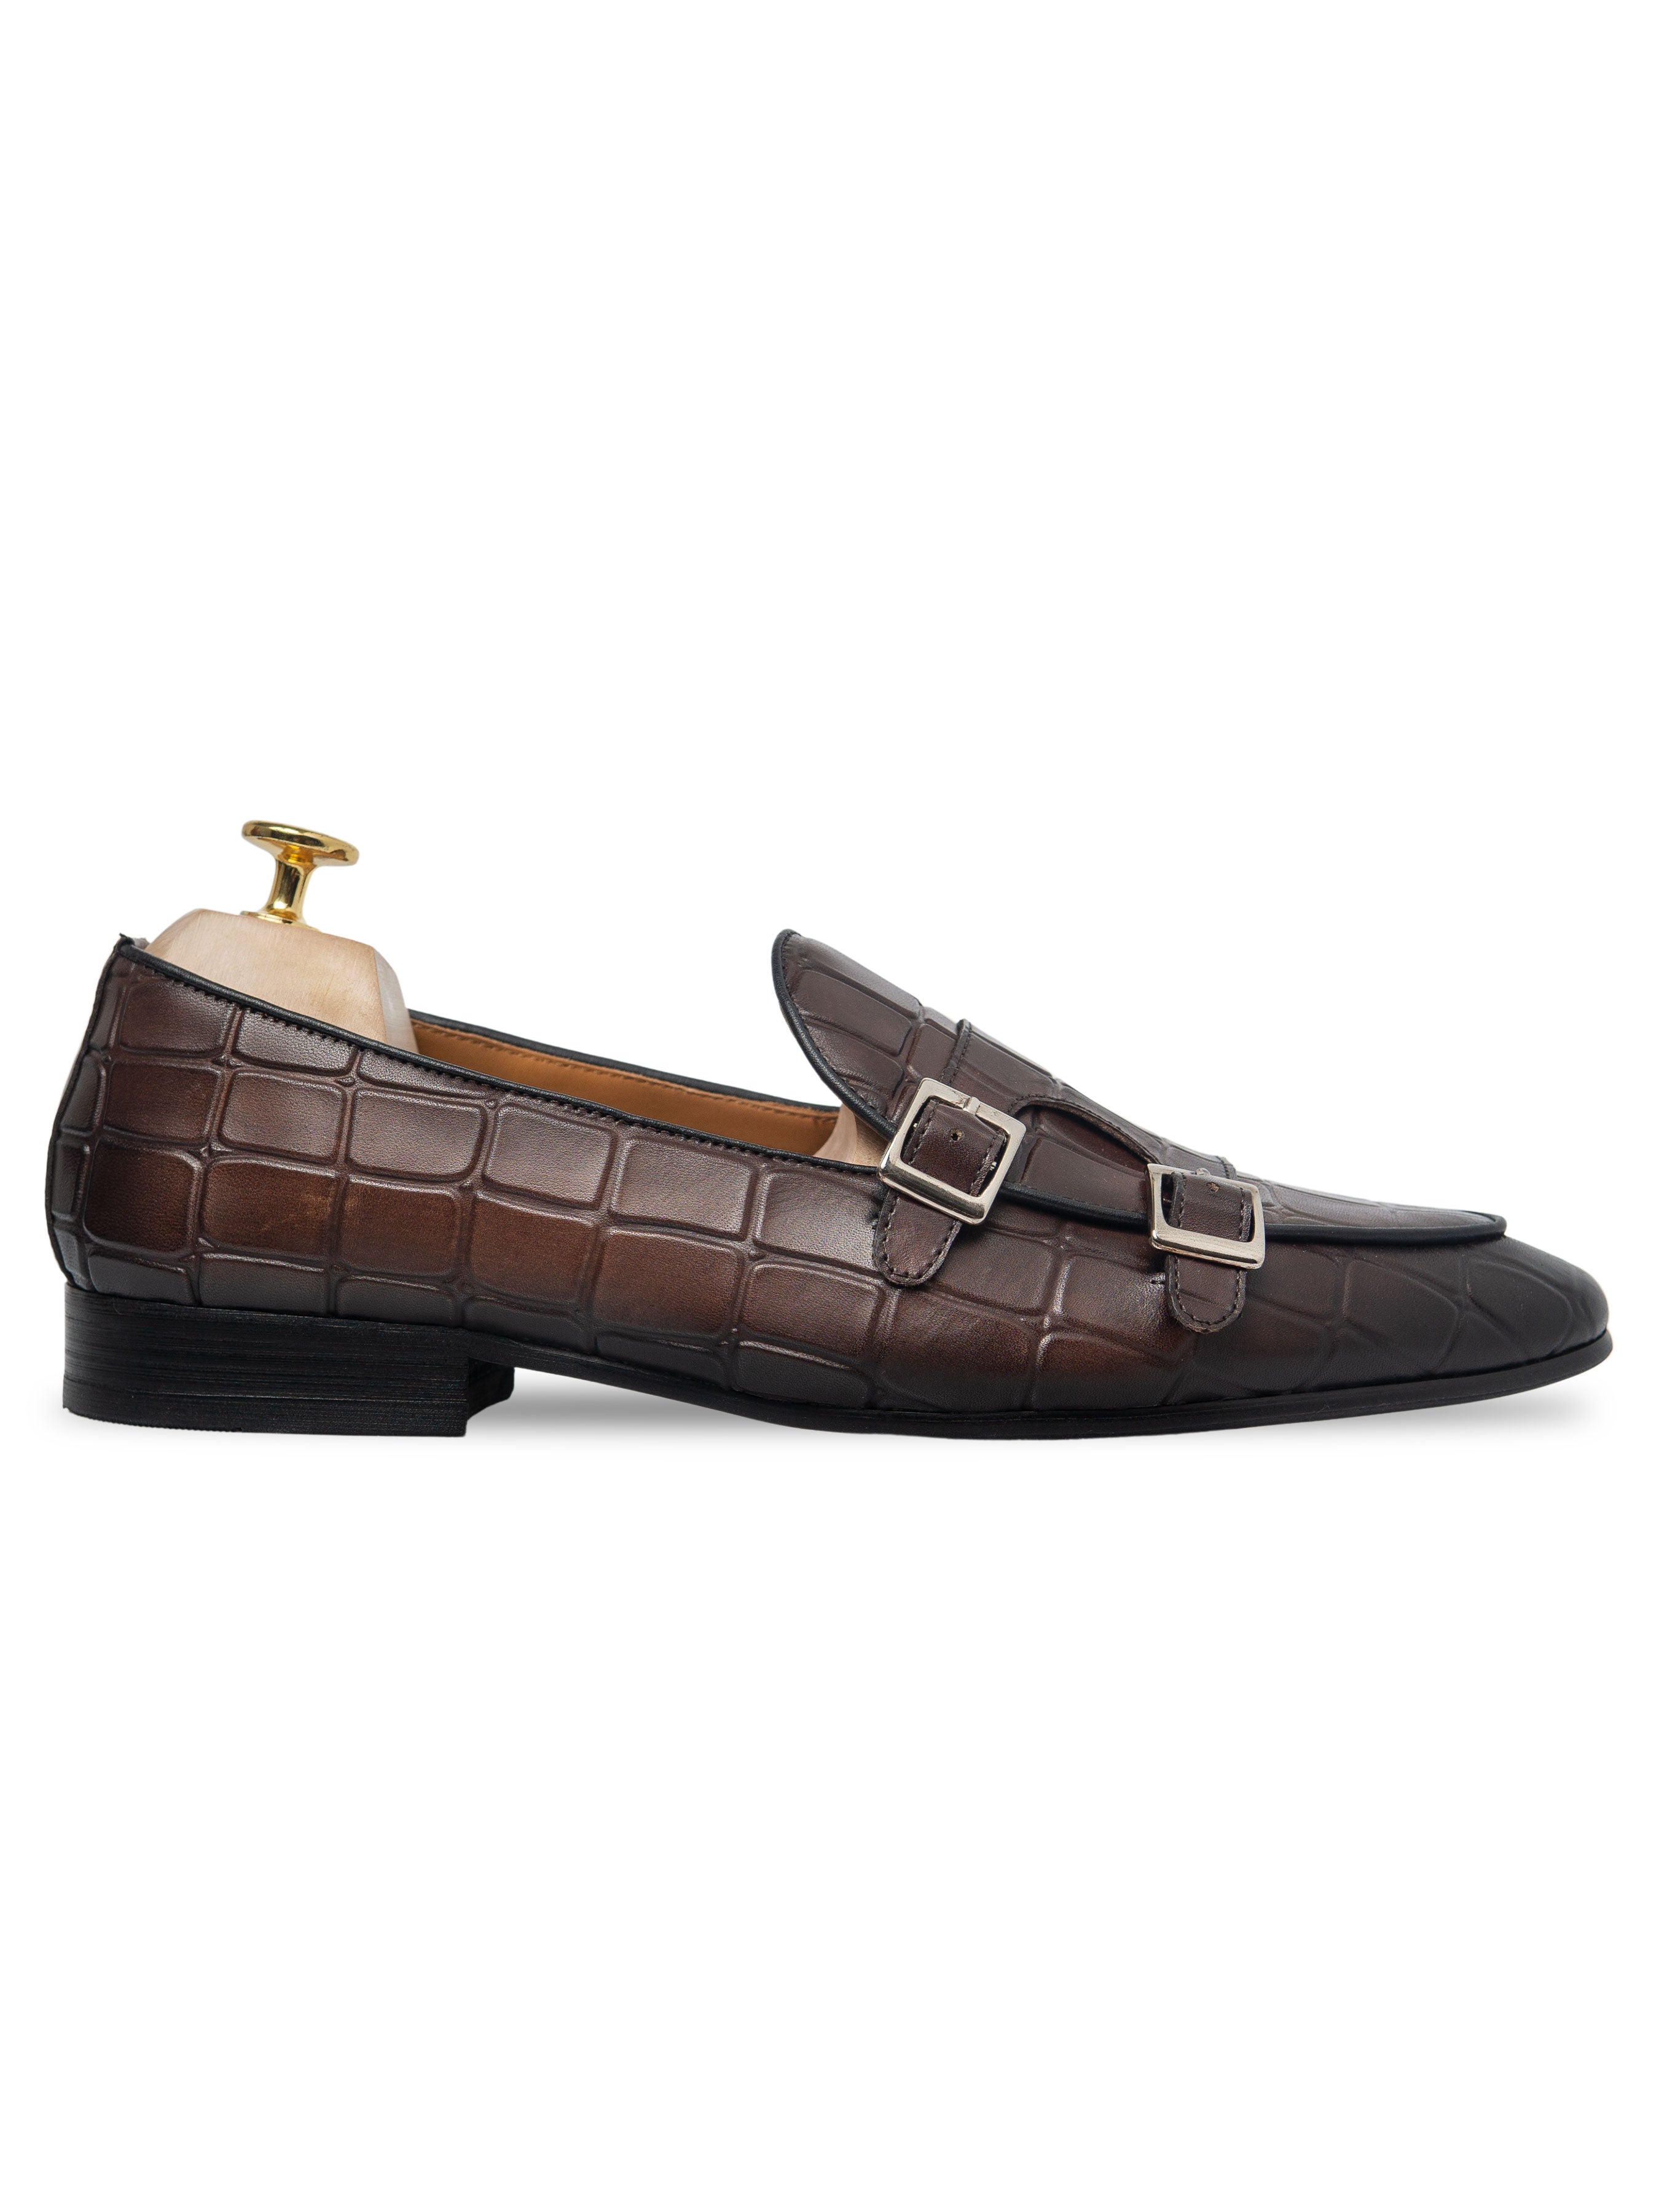 Belgian Loafer - Dark Brown Croco Double Monk Strap - Zeve Shoes